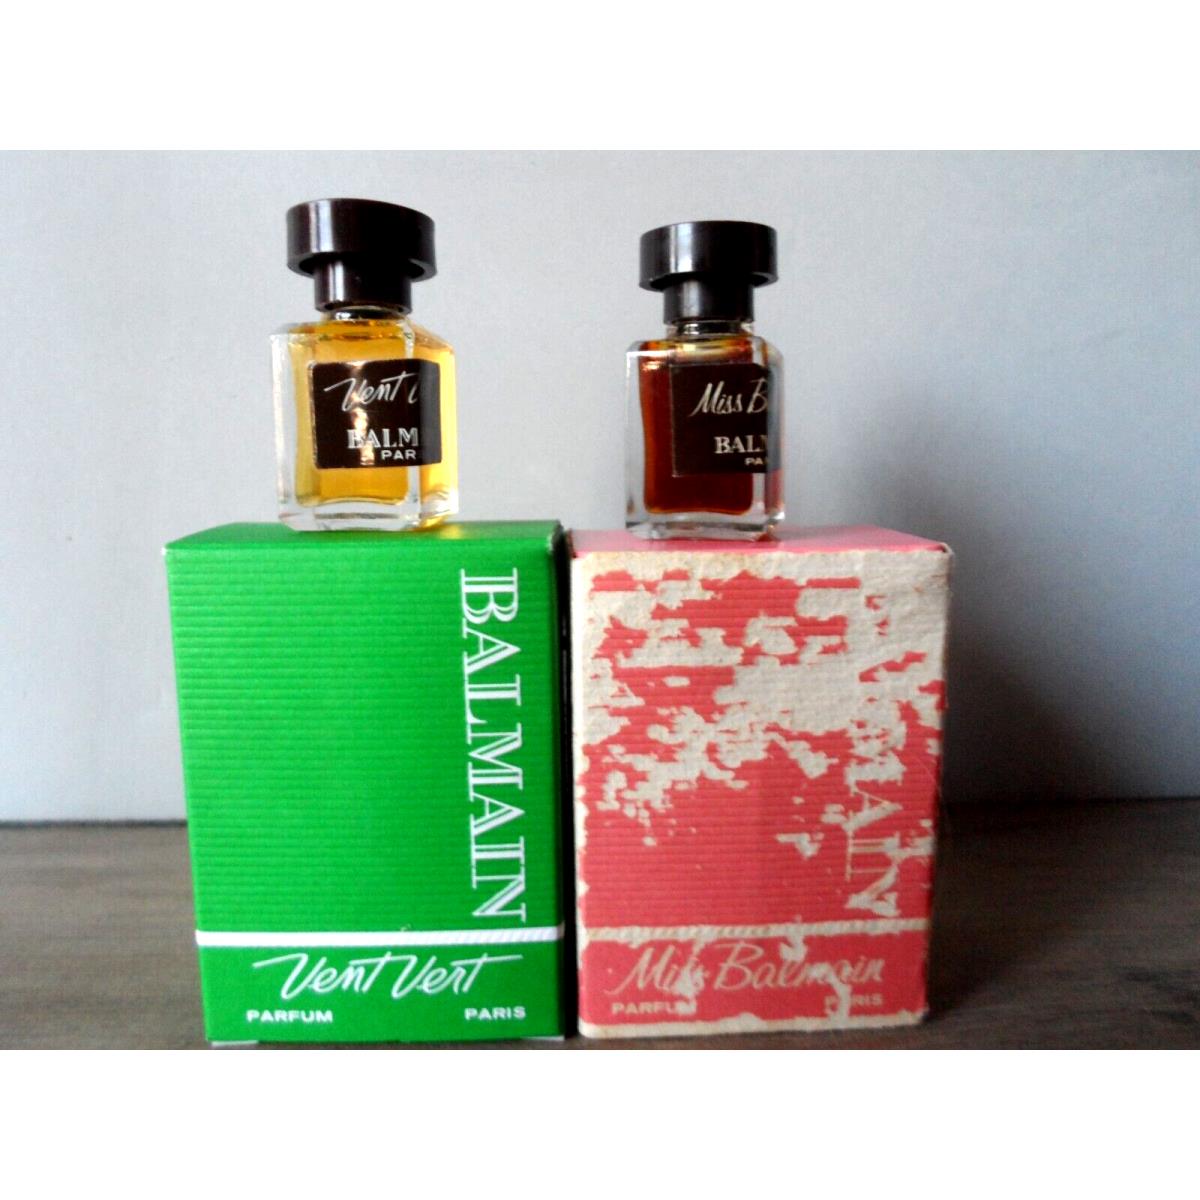 Miss Balmain + Vent Vert Parfum Miniature 4 ml Boxed Full Perfume Vintage